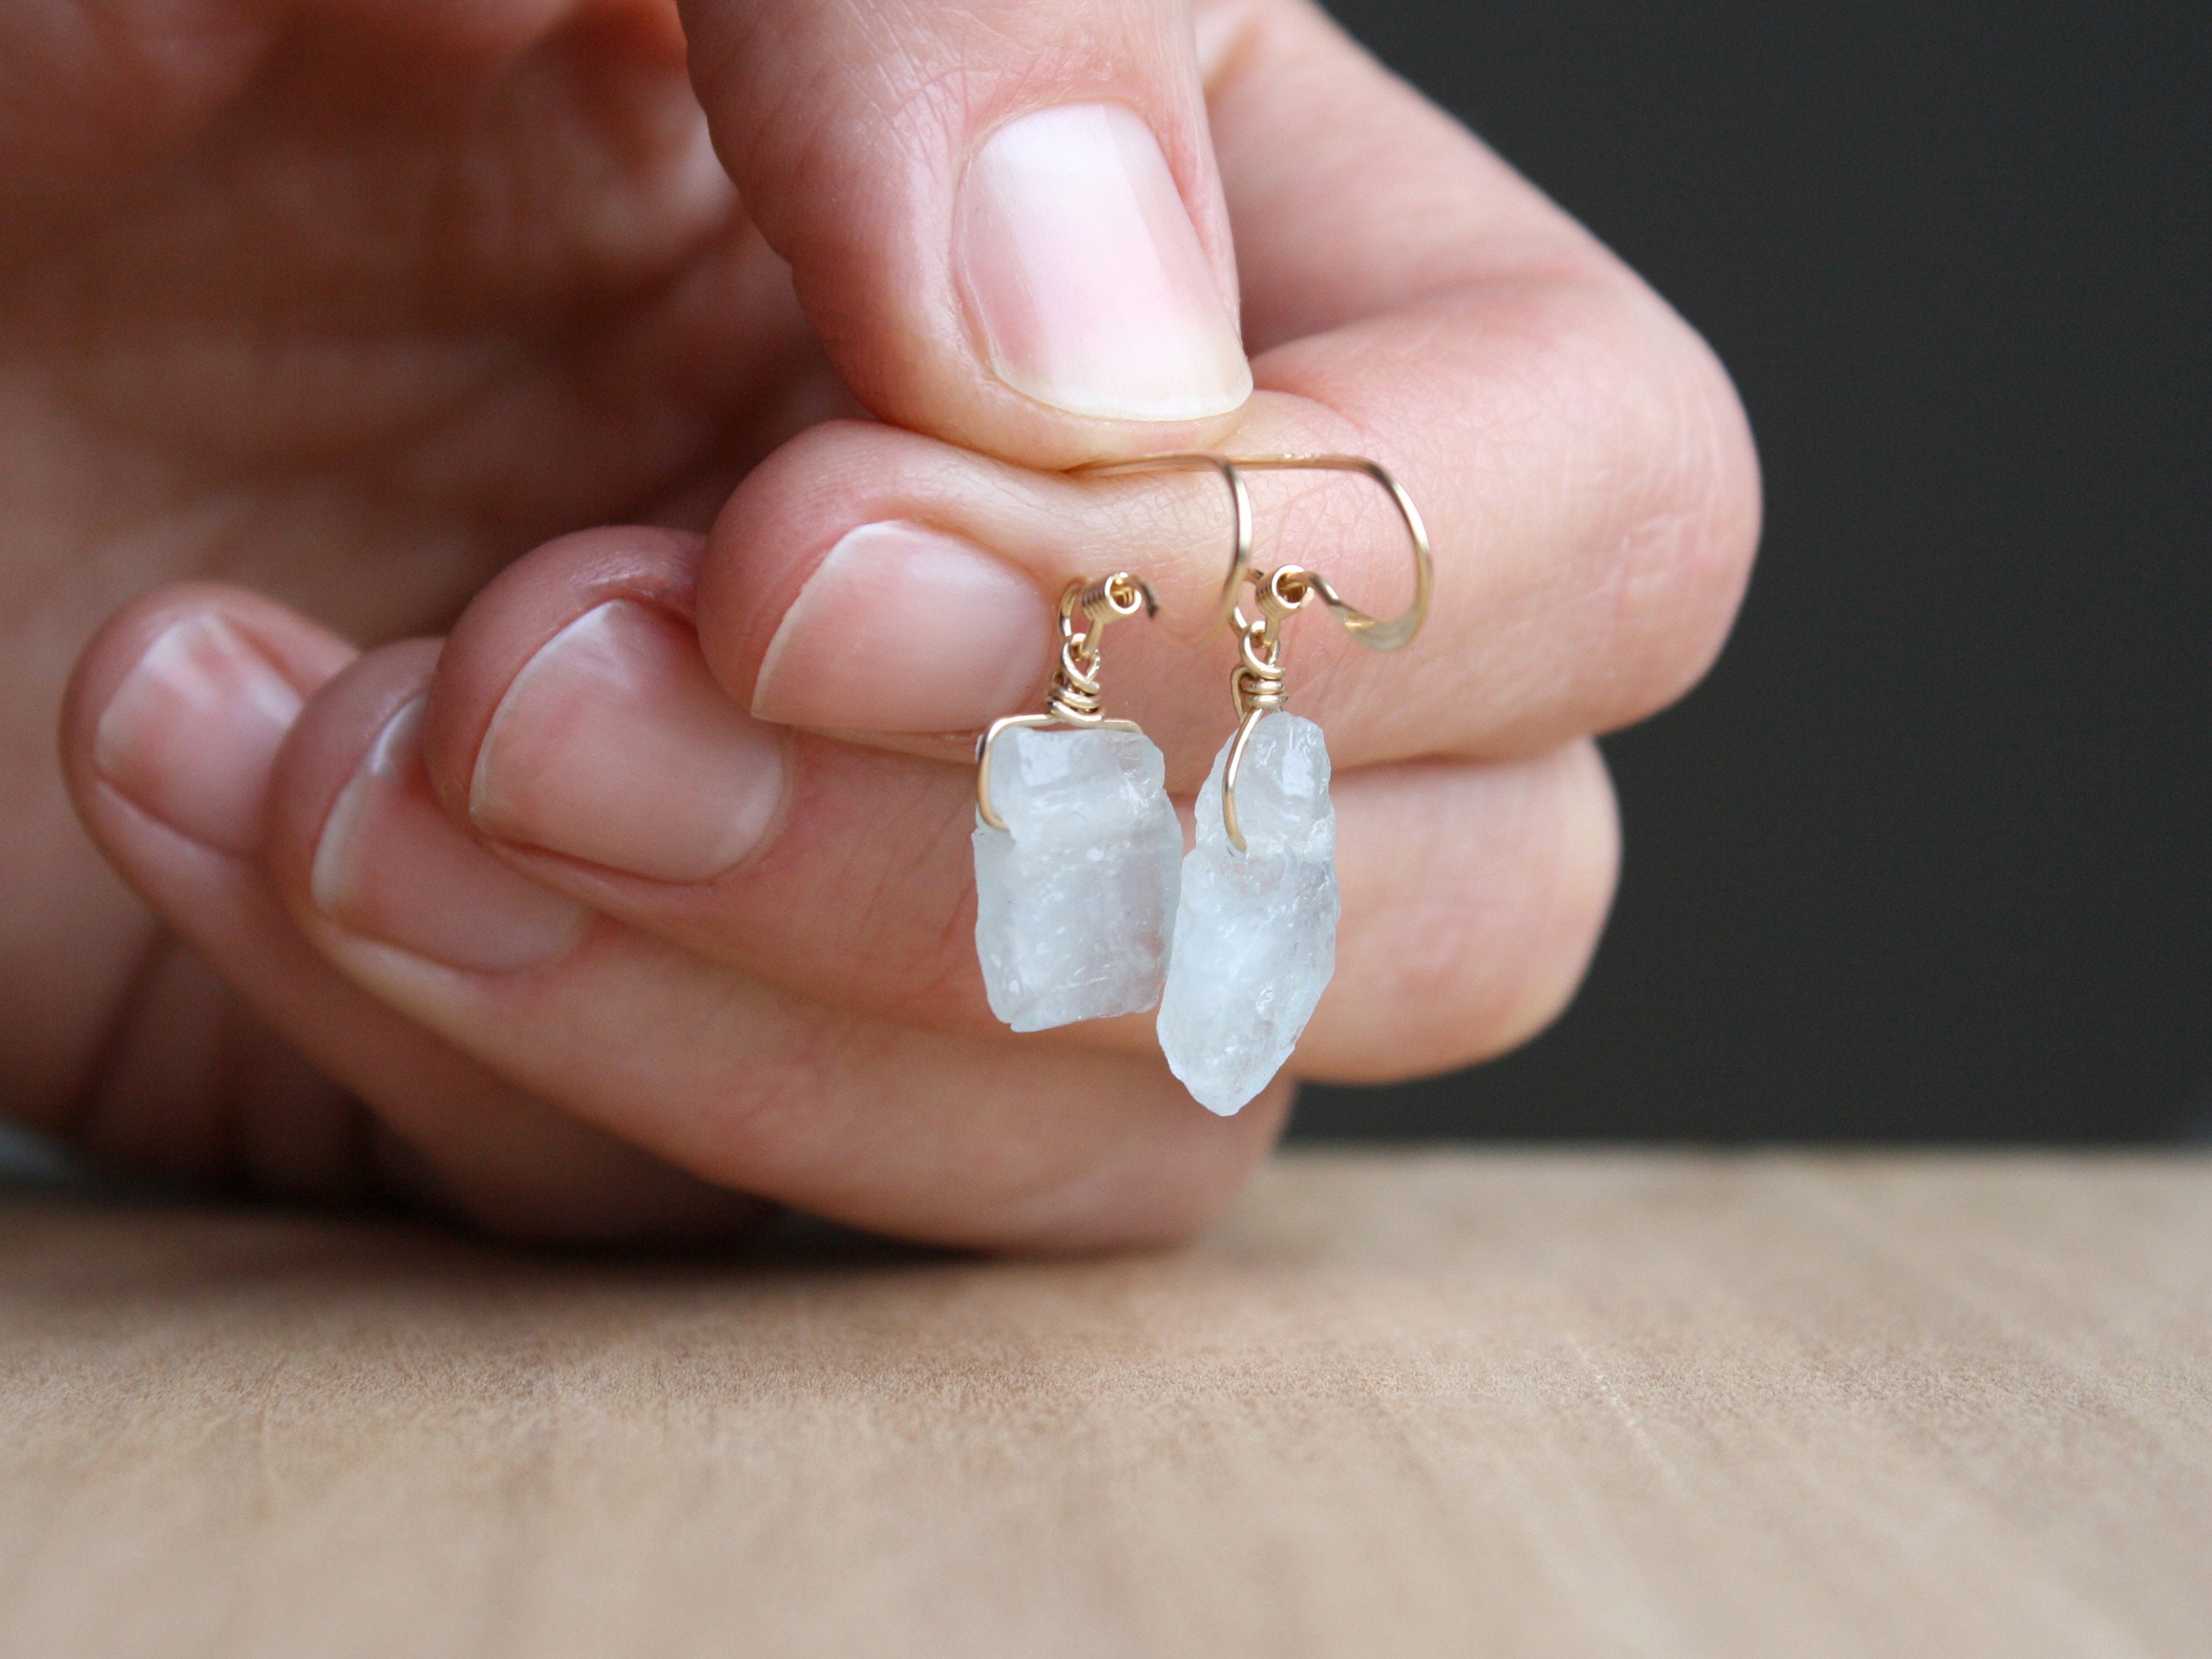 Aquamarine earrings silver earrings gold filled earrings natural stone earrings